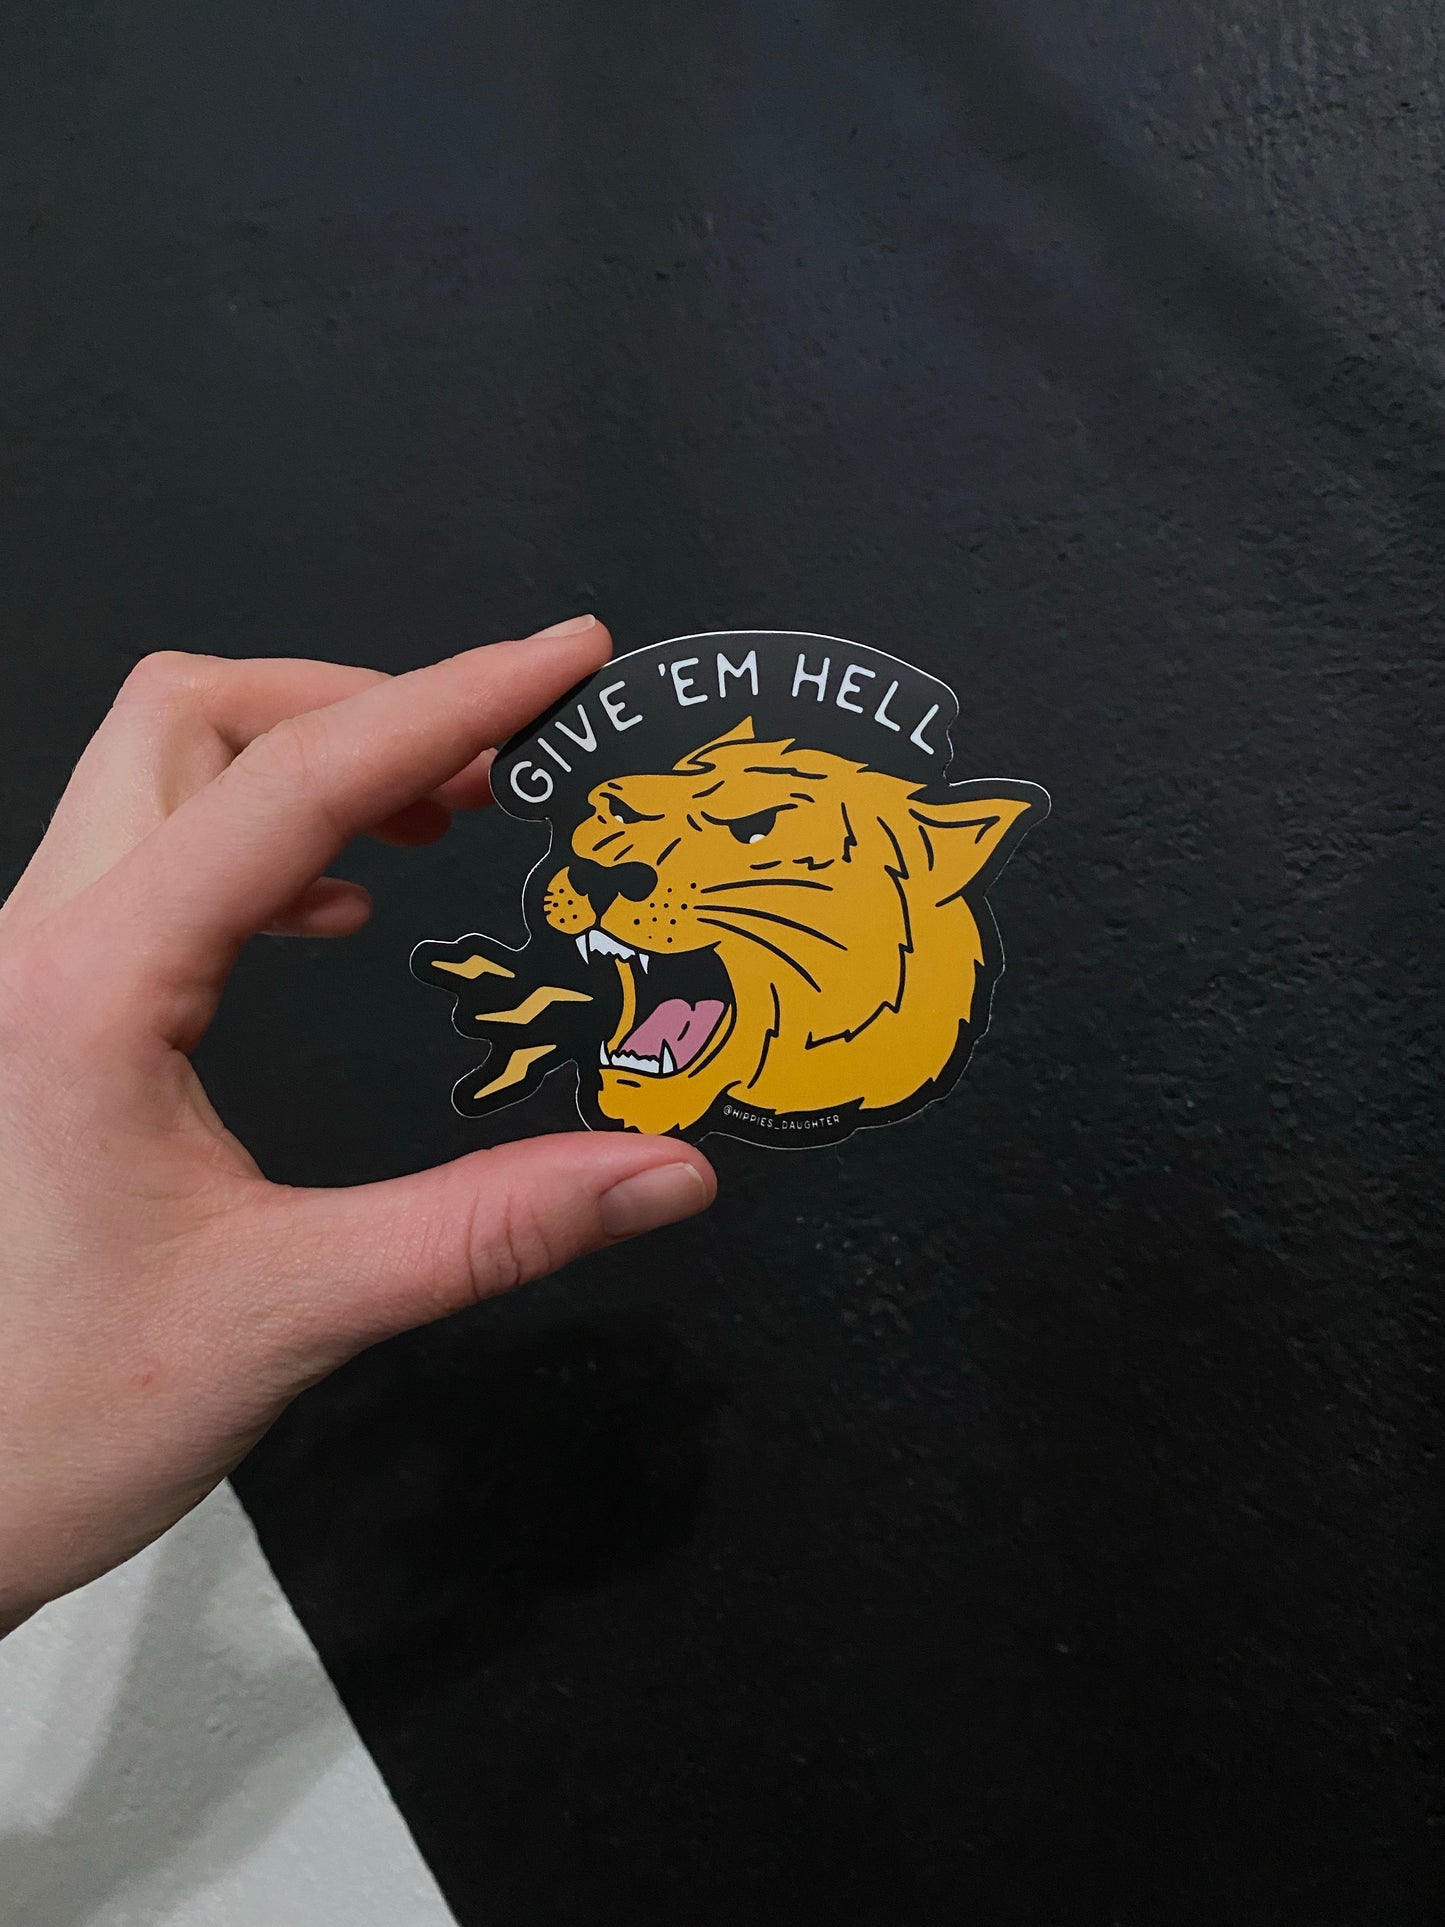 Give ‘em hell // sticker